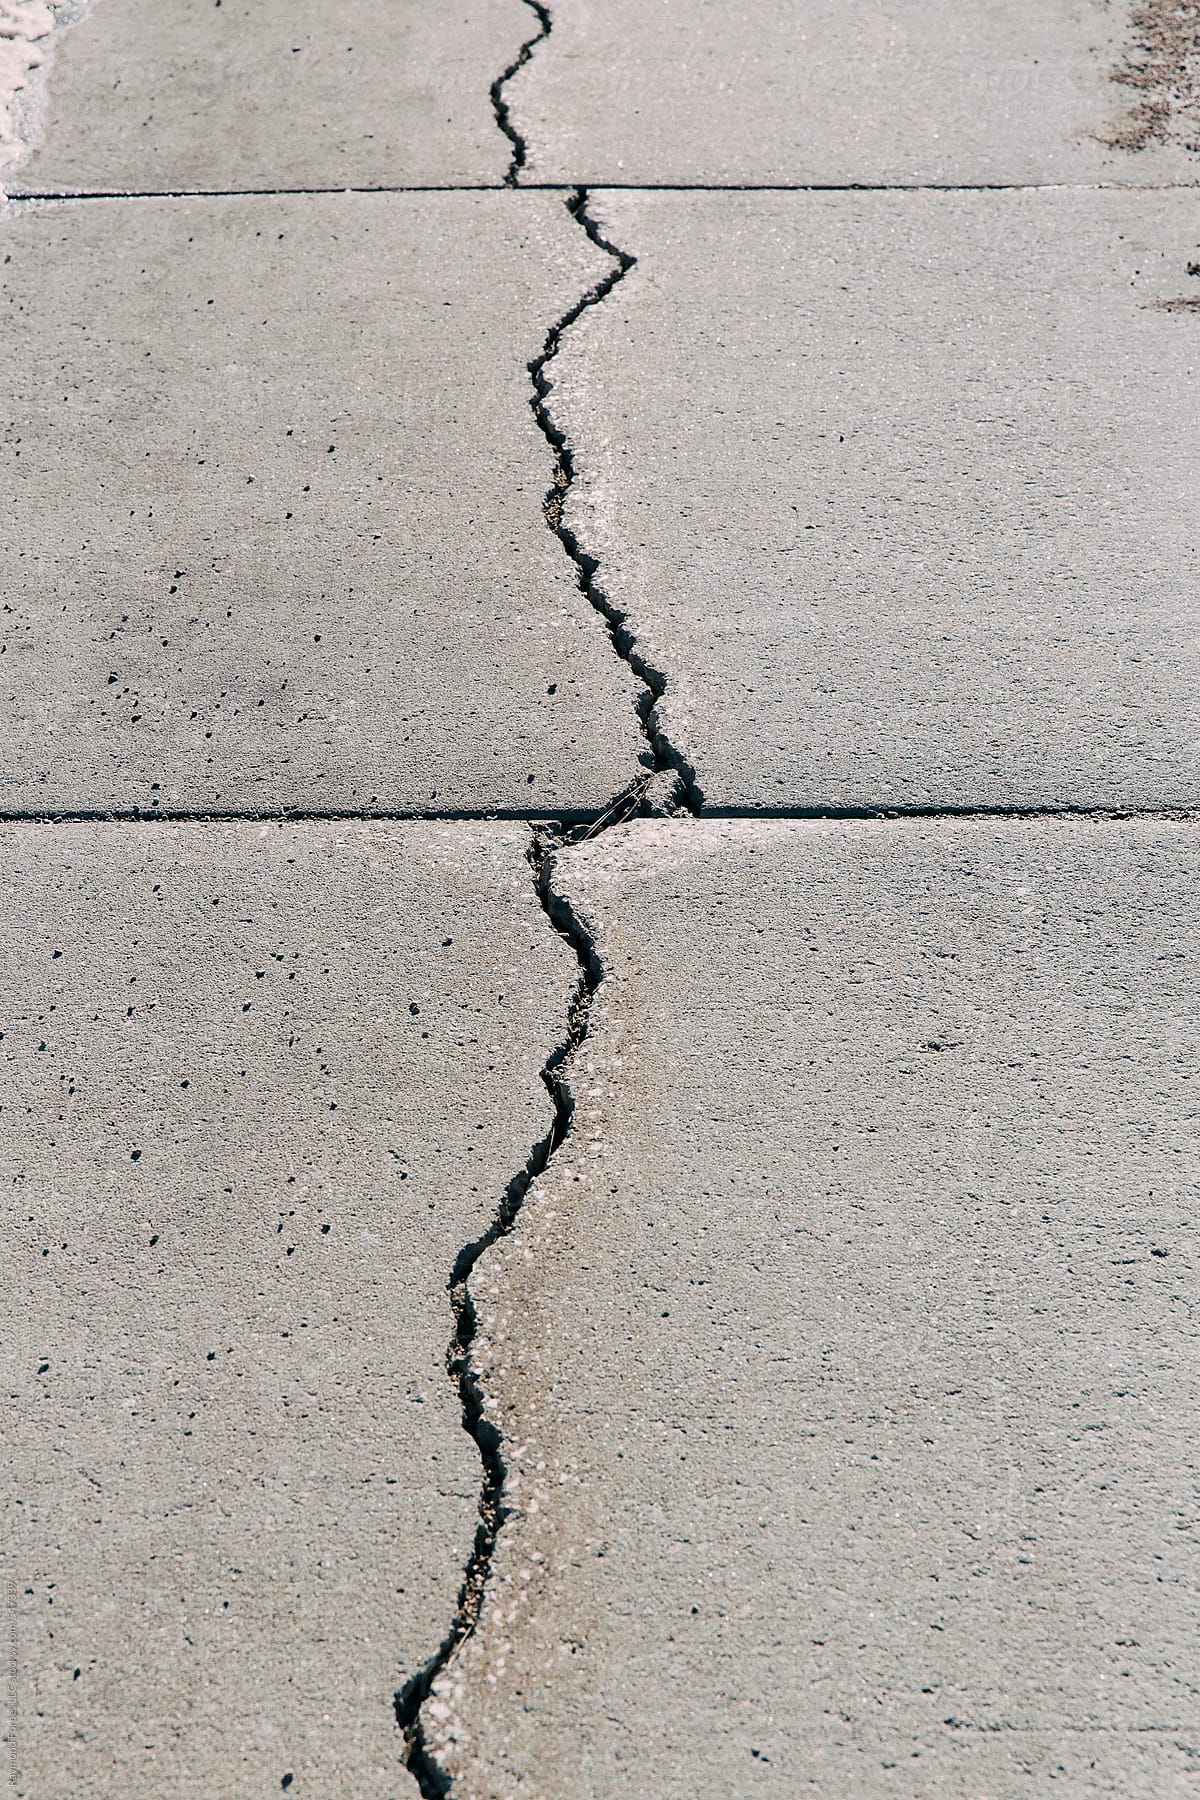 Crack in the Sidewalk